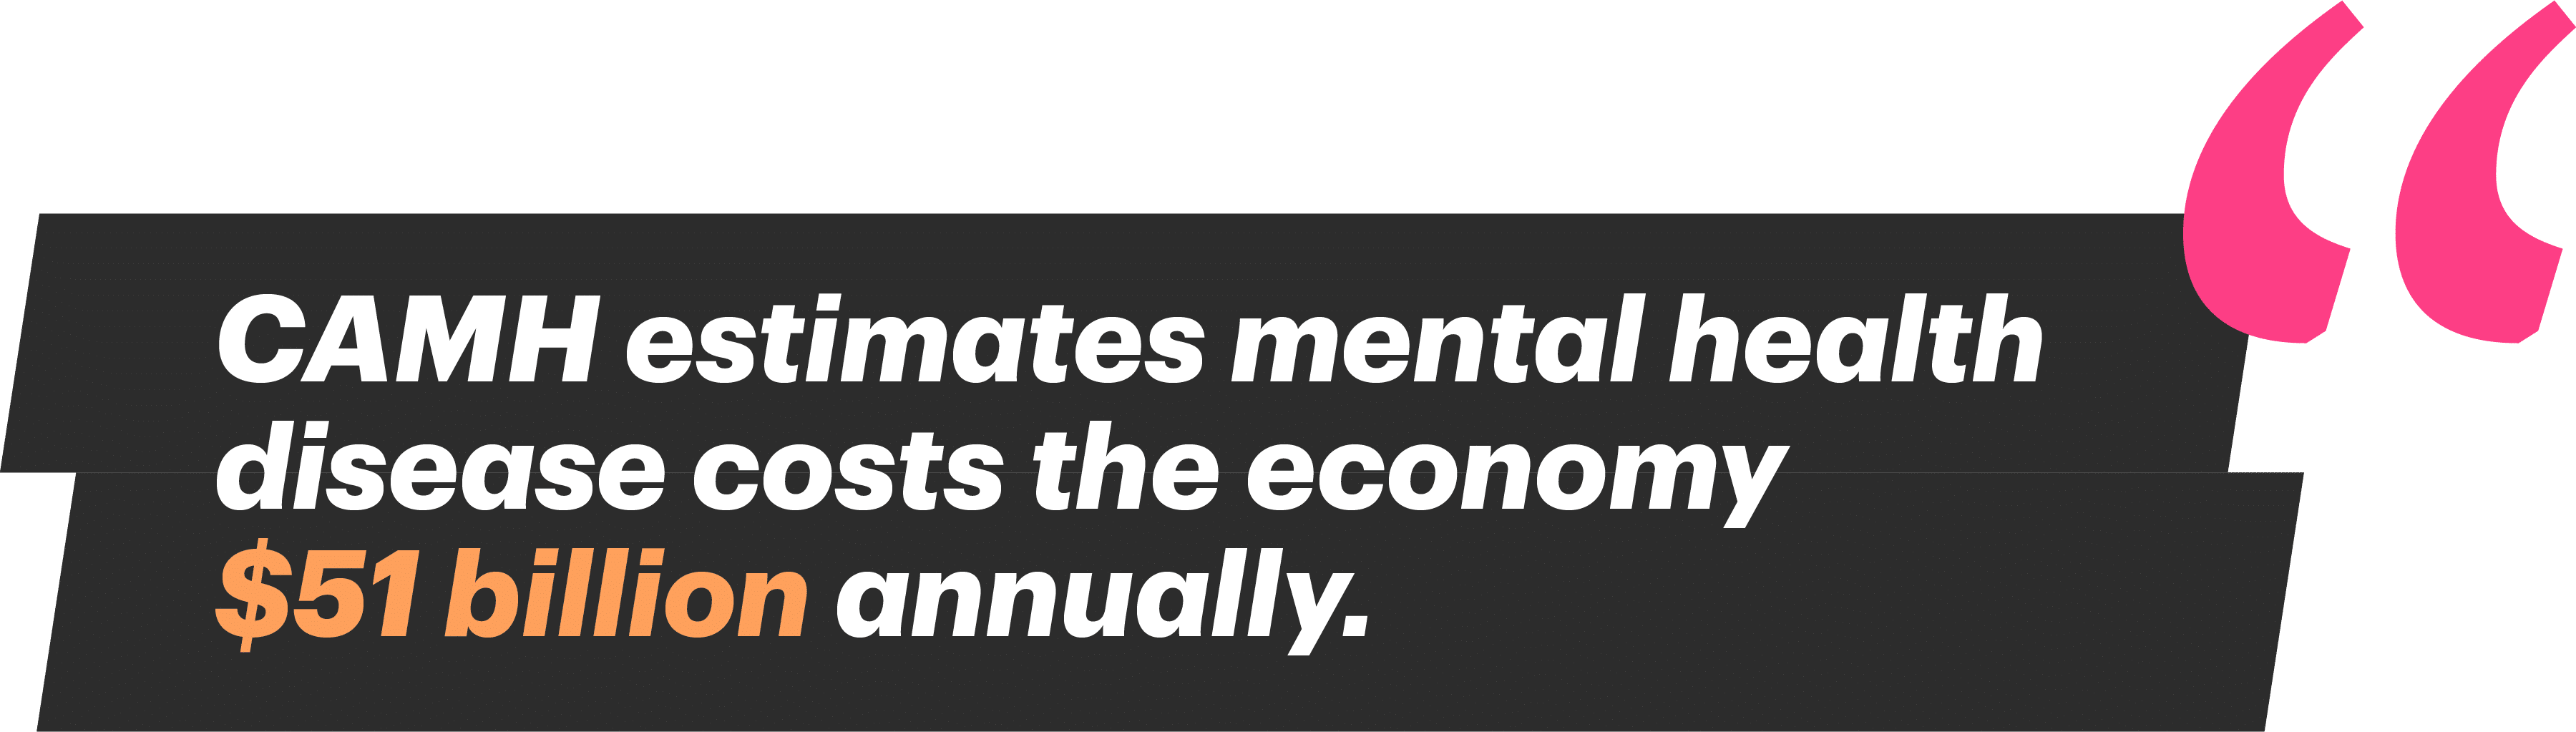 CAMH estimates mental health disease costs the economy $51 billion annually.